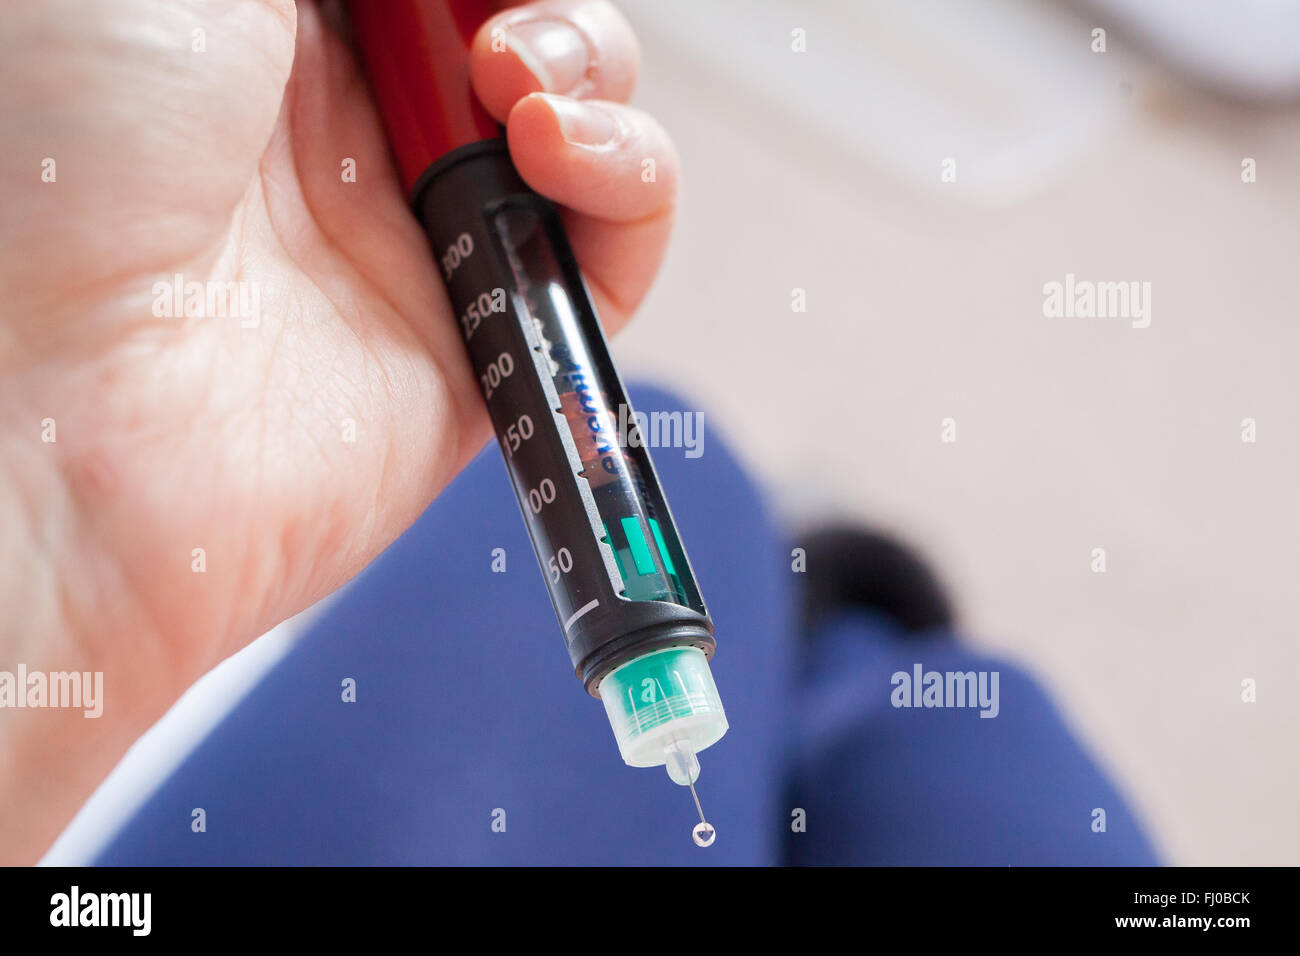 Un close-up de la insulina de acción lenta Levemir en la punta de una pluma de insulina. Foto de stock